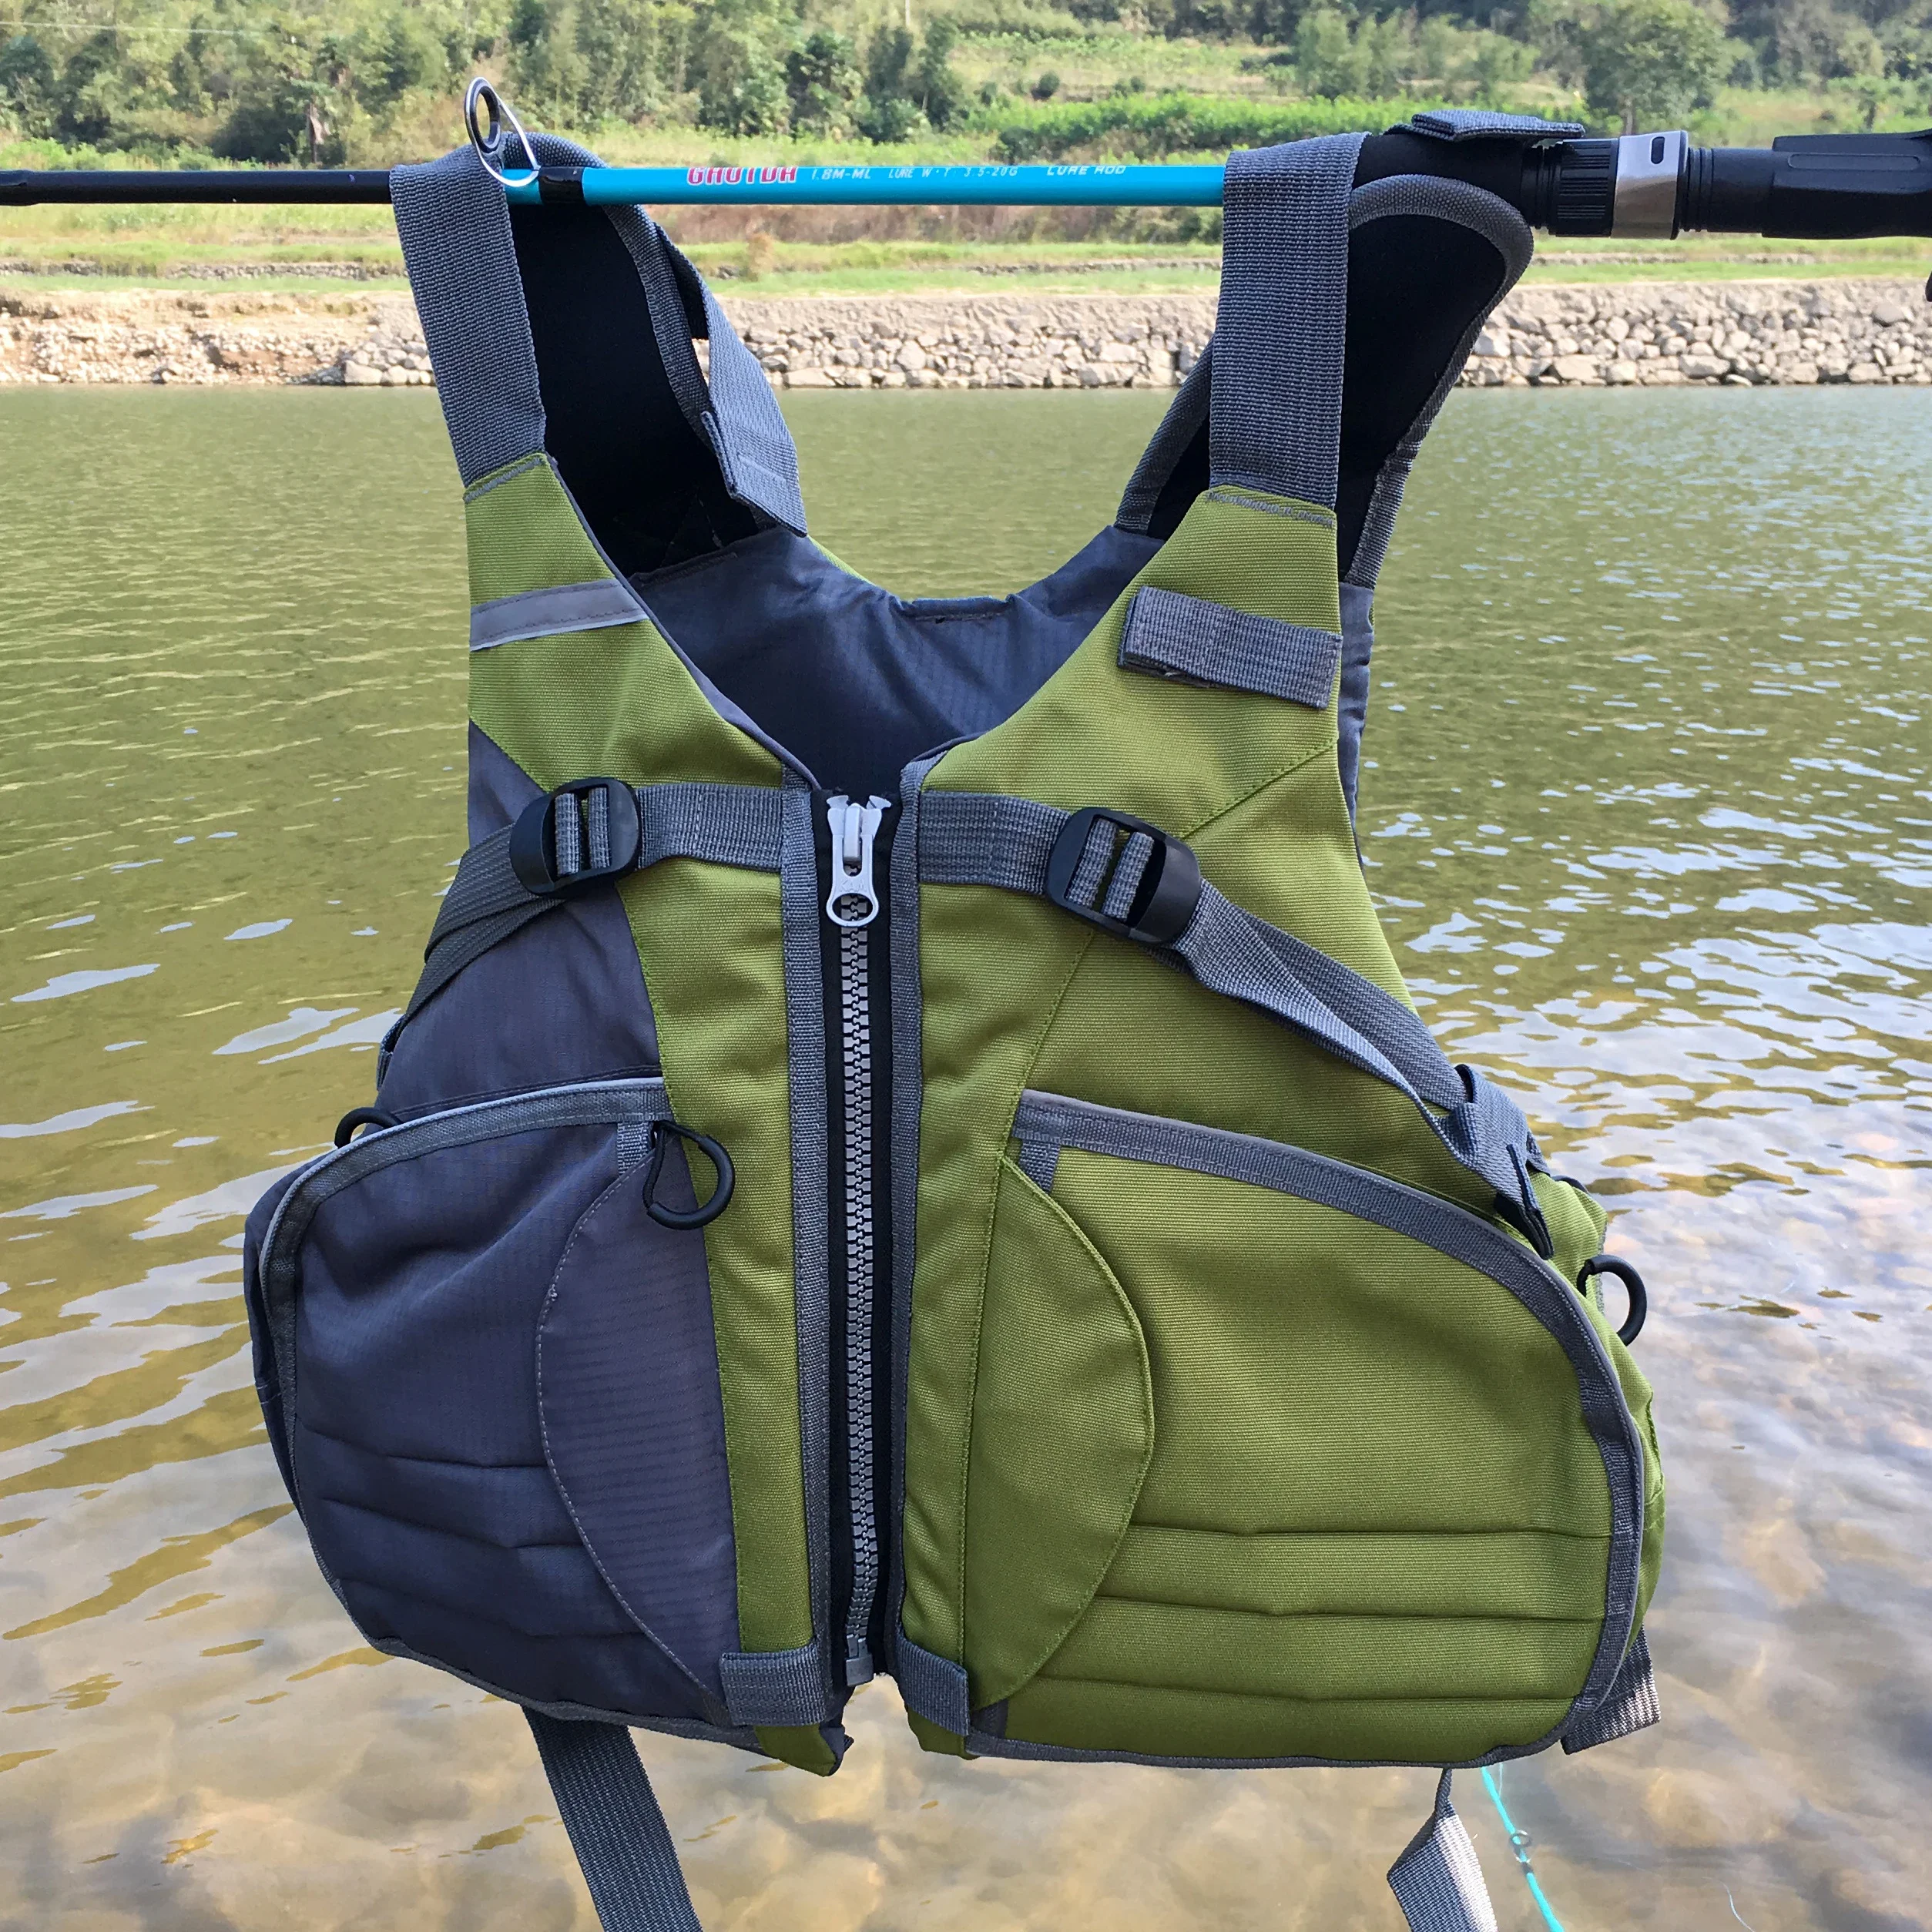 Fisherman Life Jacket (PFD) | Lifejacket for Fishing - Stohlquist WaterWear